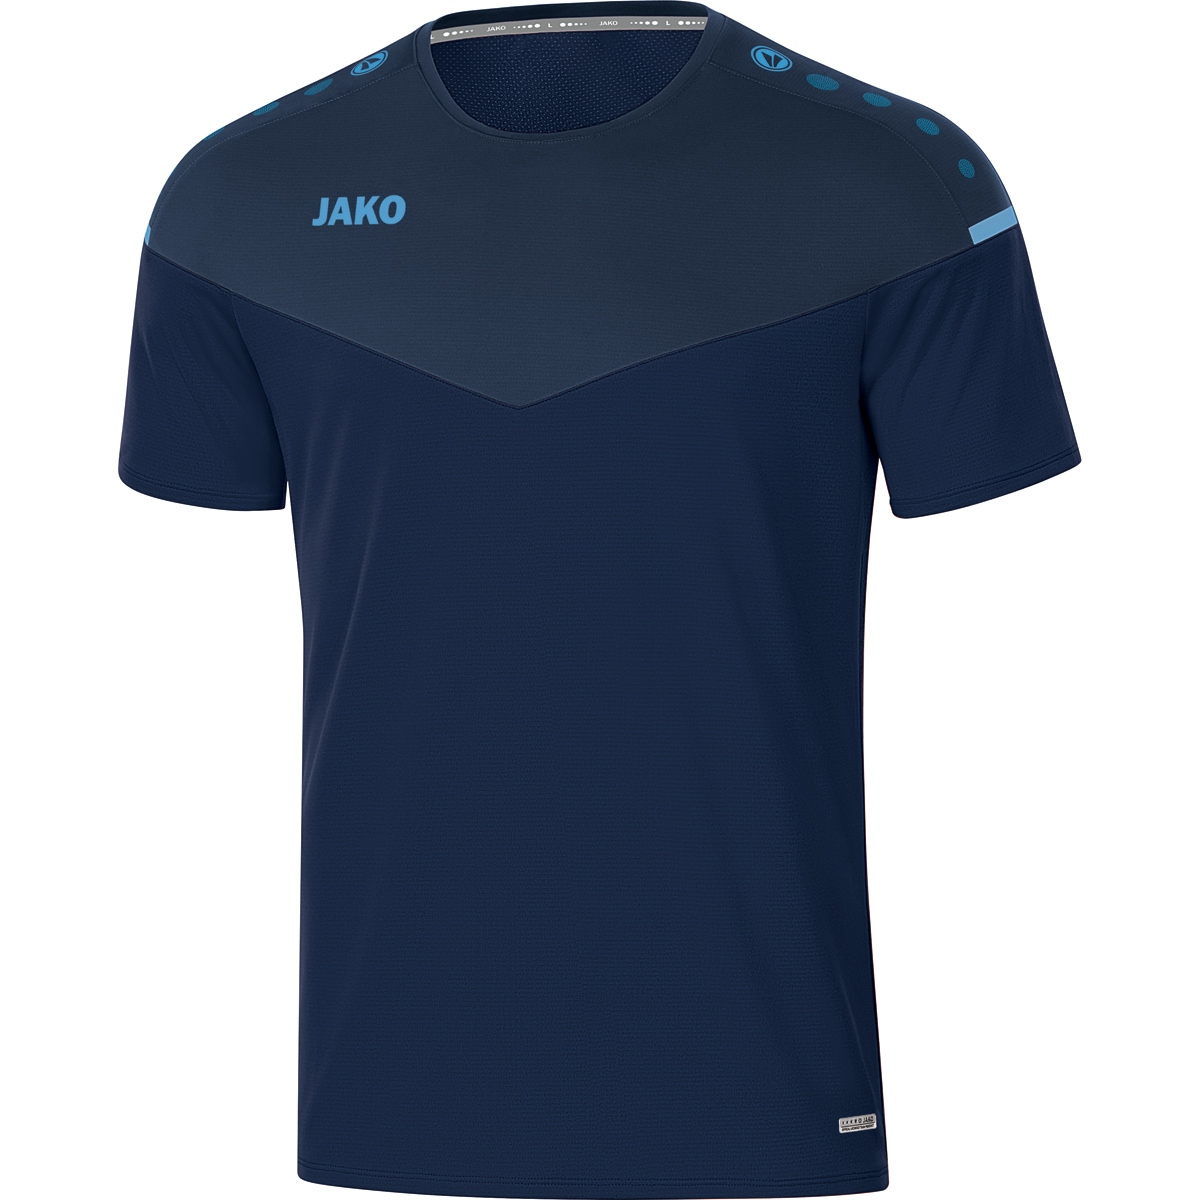 Gr. JAKO Champ XXL, marine/darkblue/skyblue, Herren, T-Shirt 2.0 6120